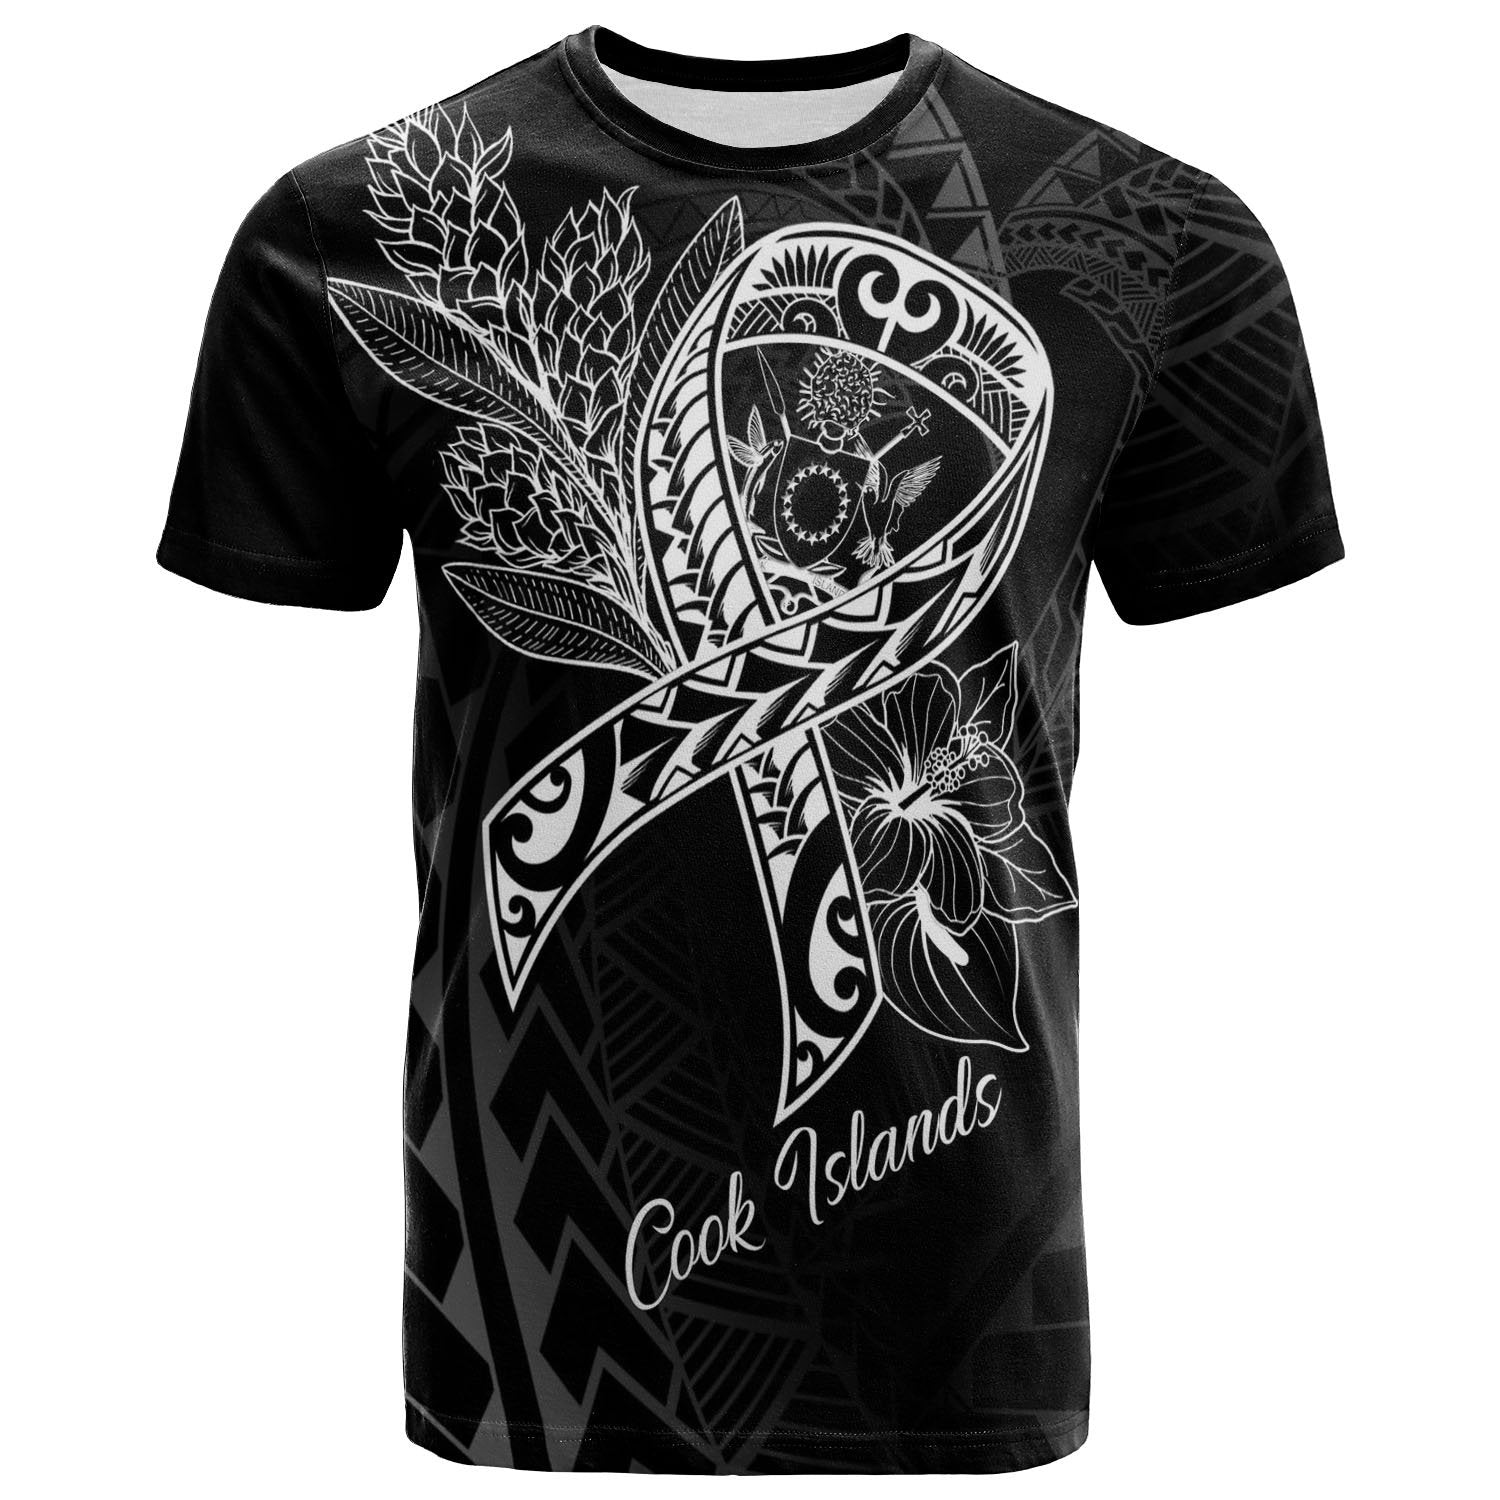 Cook Islands T Shirt Ribbon Polynesian Style Unisex Black - Polynesian Pride